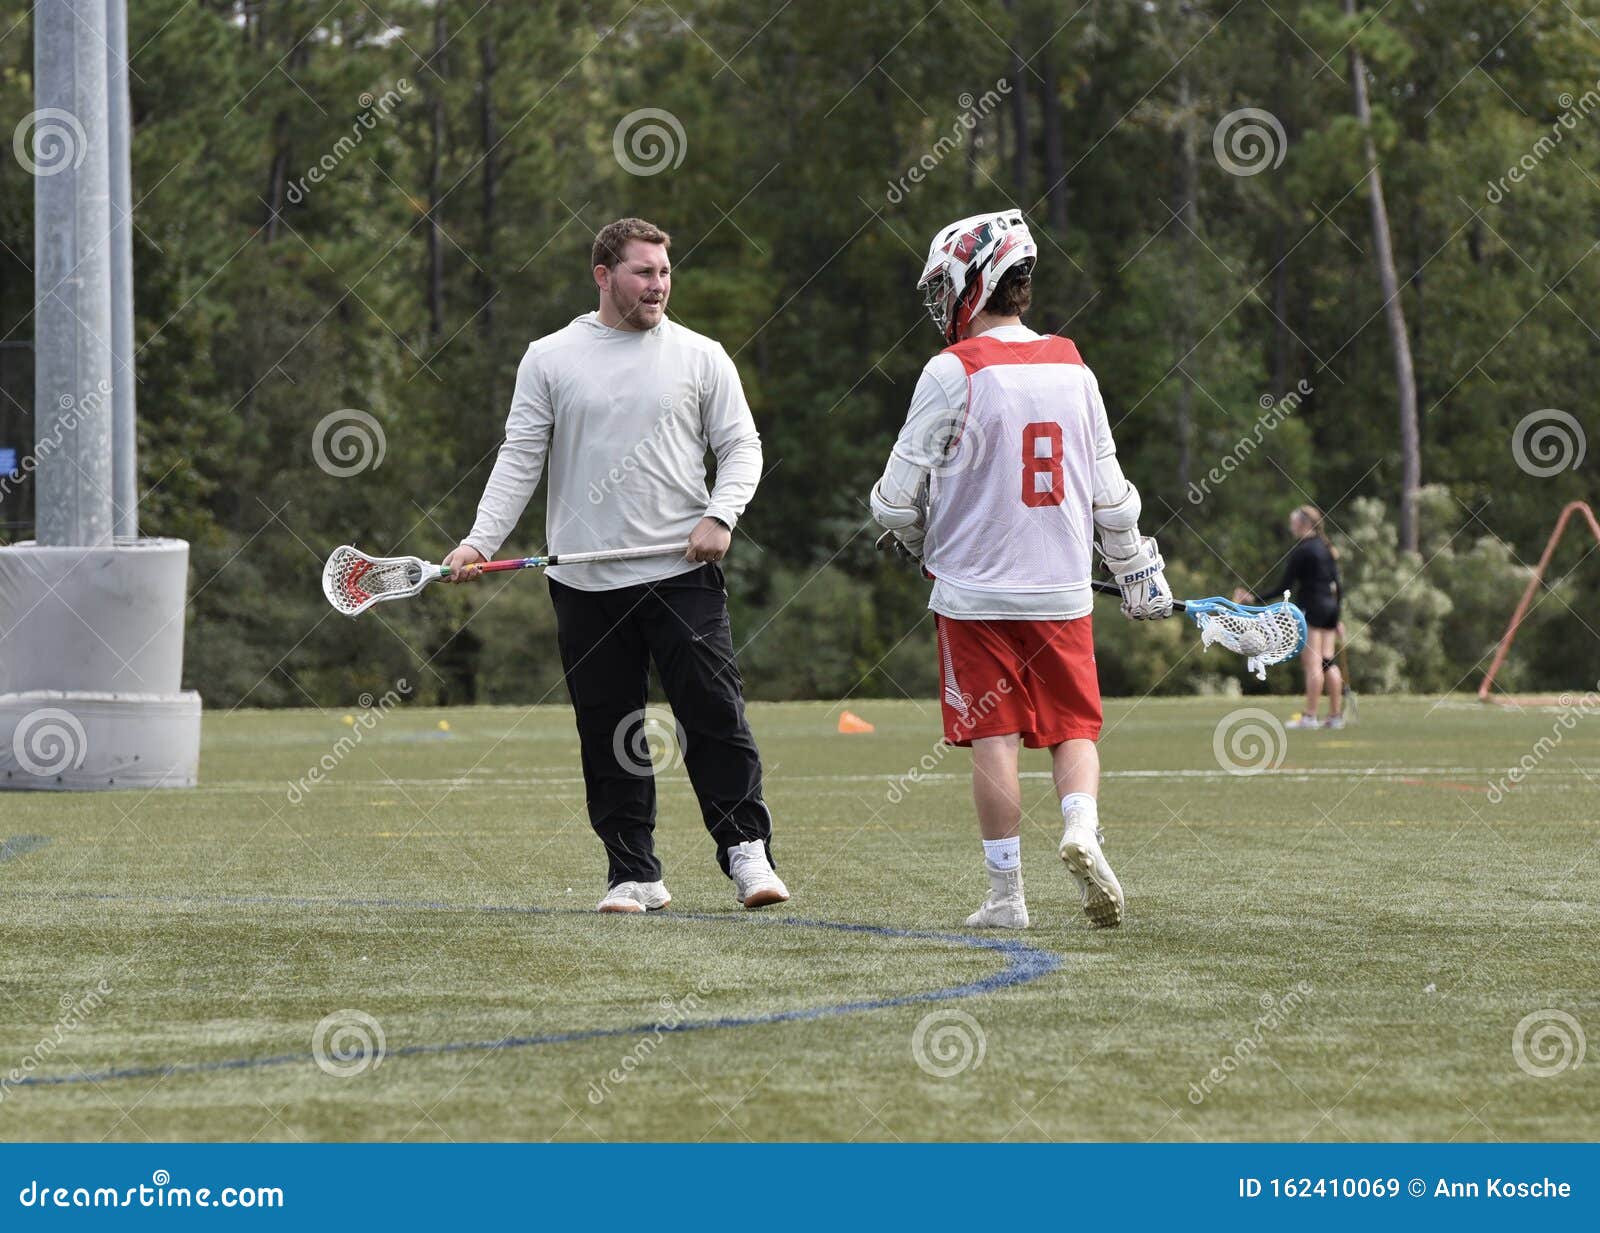 PLL, Professional Lacrosse Player, Matt Rambo, Teaching a Young